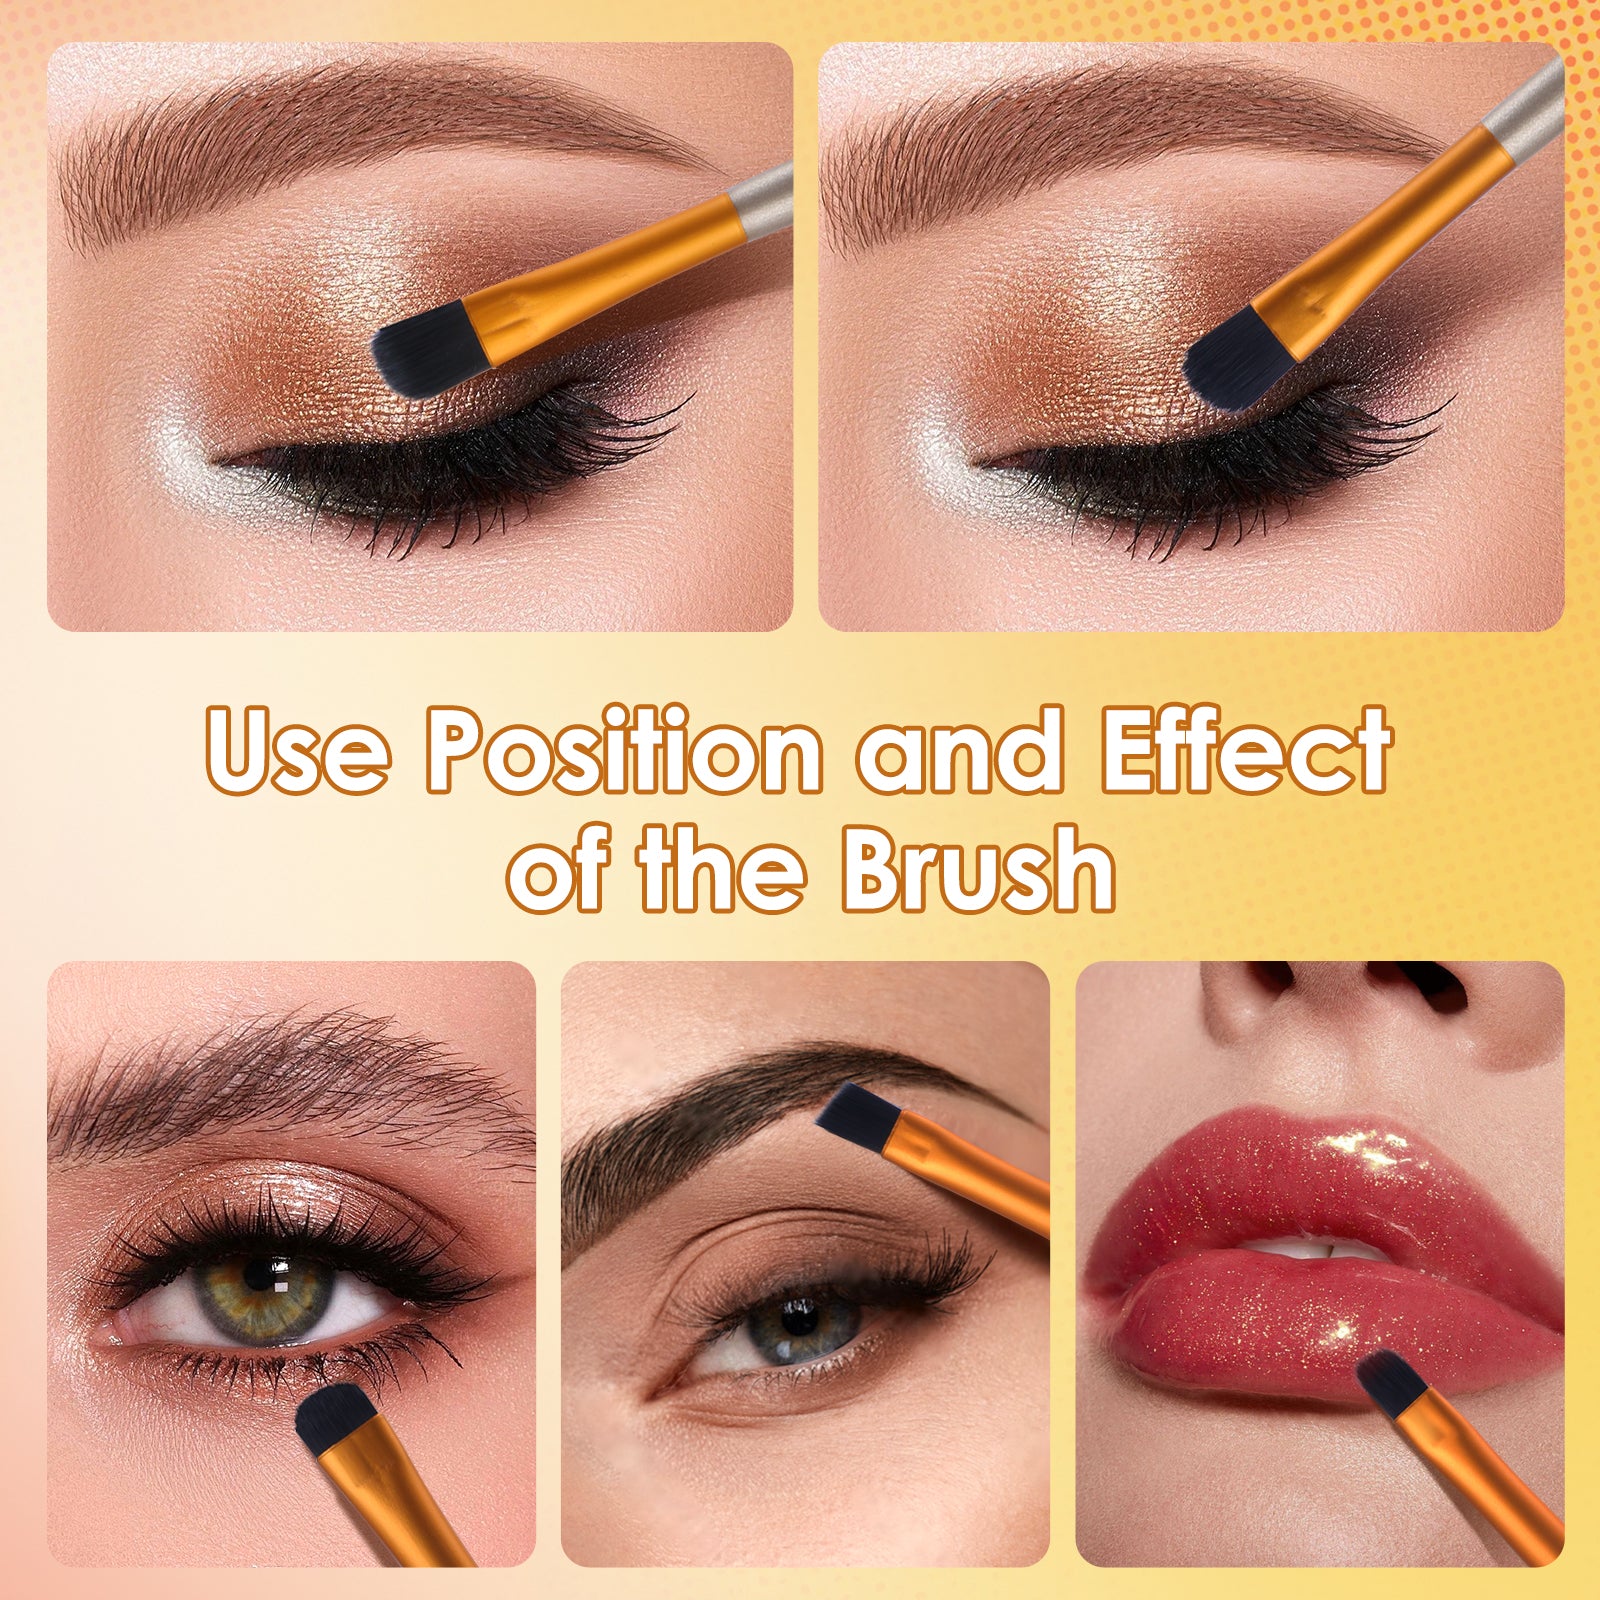 Ceppin 5Pcs Eyeshadow Brush Set, Portable Eye brushes, Premium Travel Eye Makeup Brush, Eyeliner Brush (Golden)